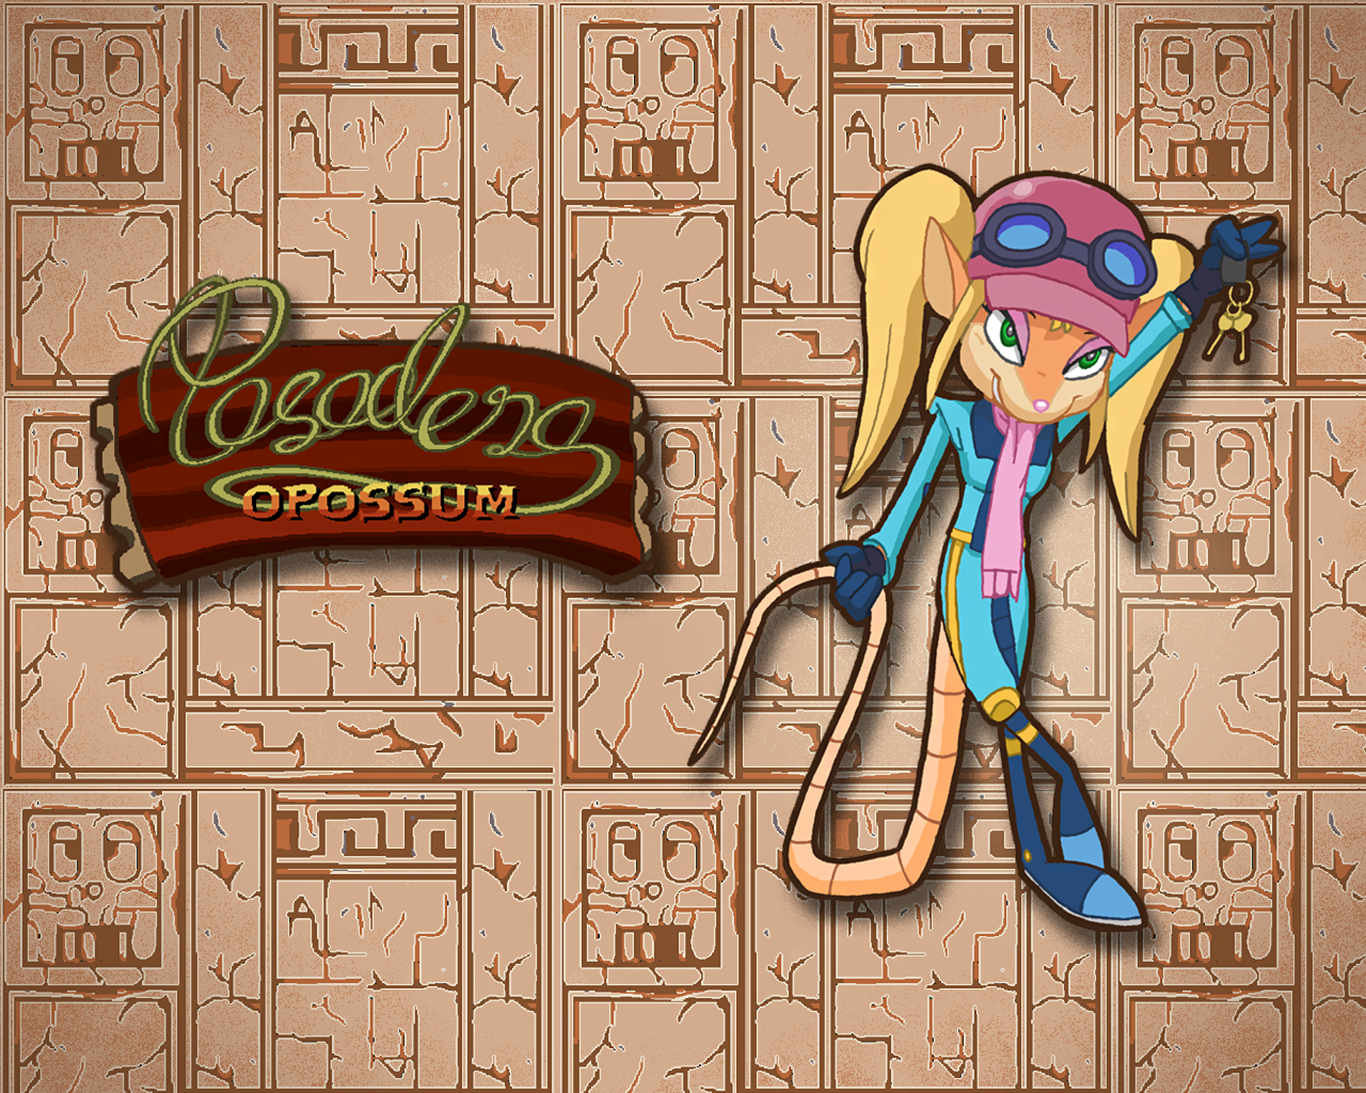 Pasadena O'Possum (Crash Bandicoot) HD Wallpapers and Backgrounds.